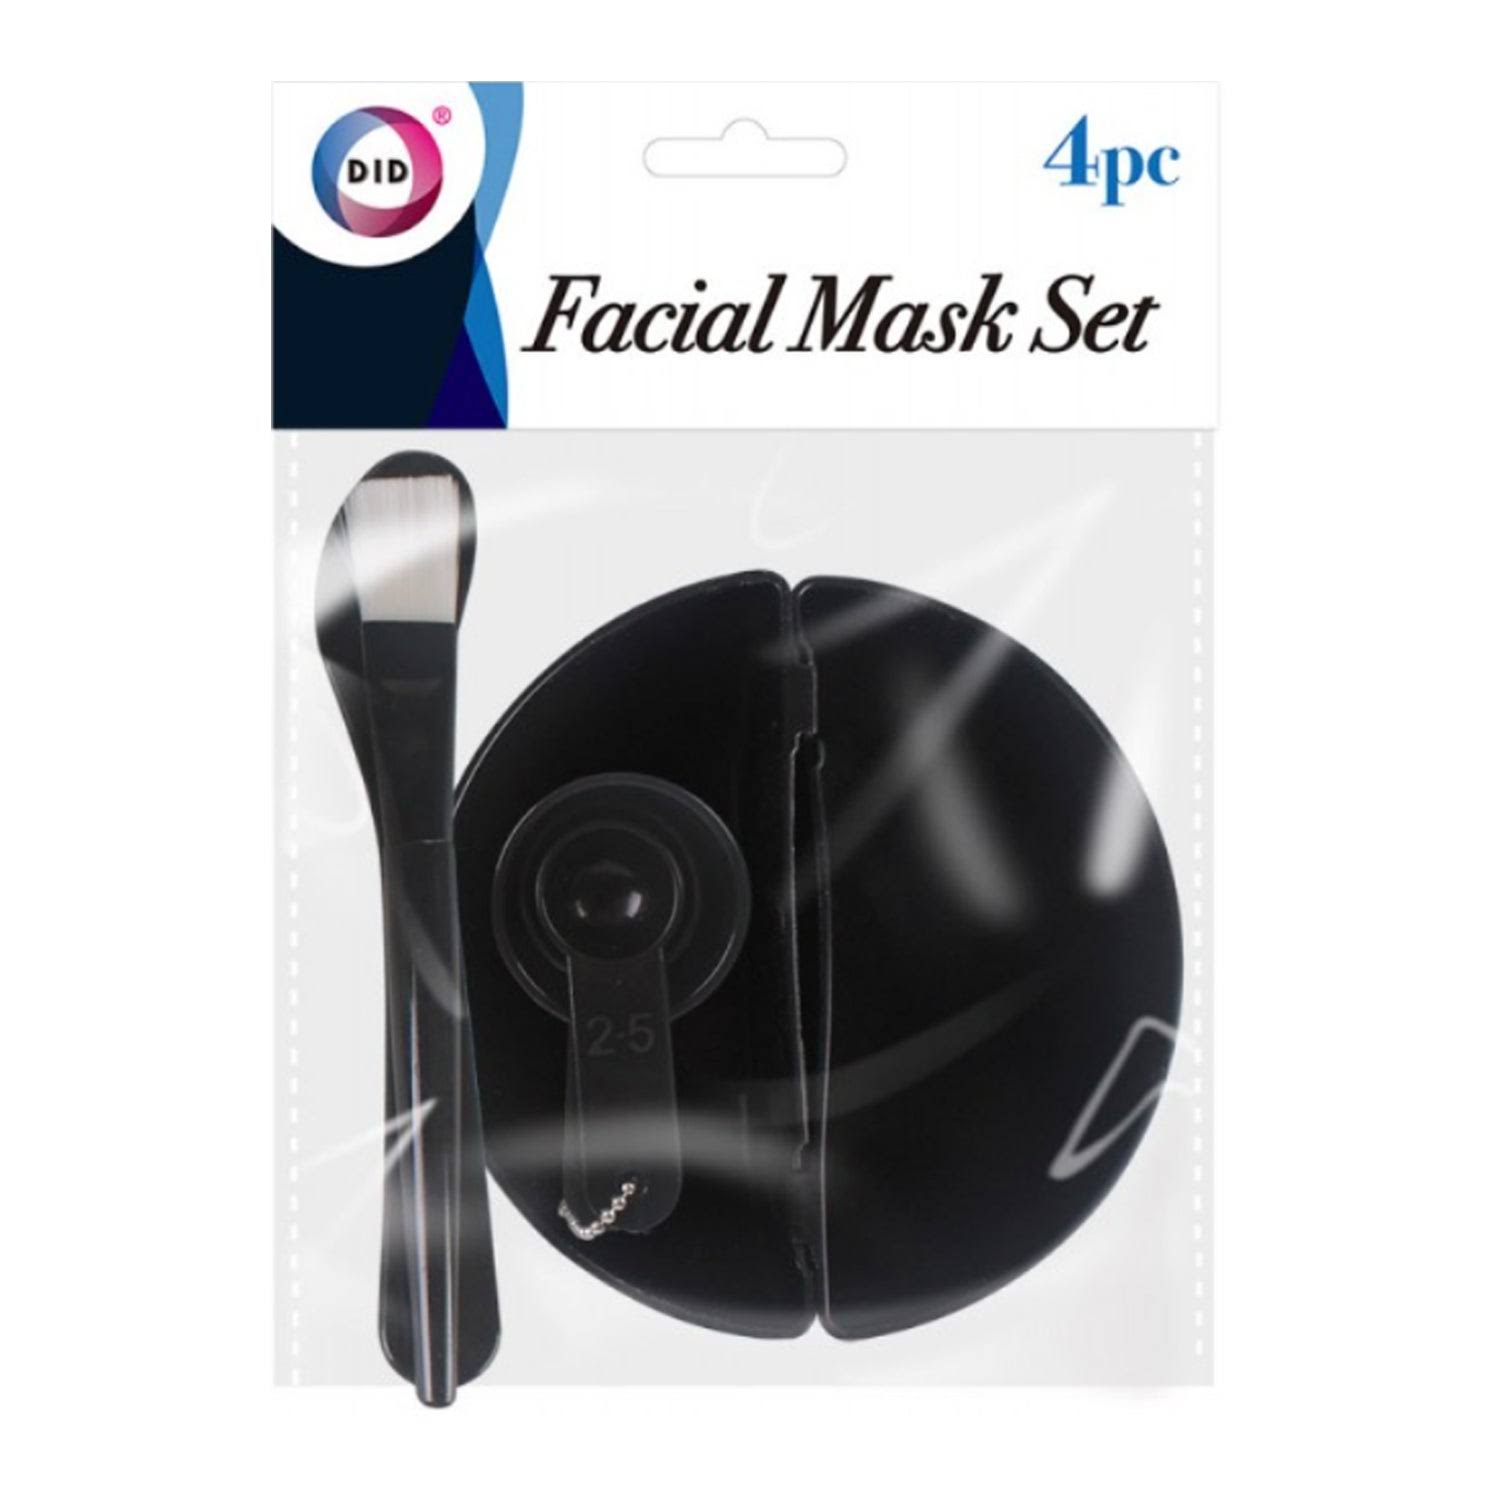 4 PC Facial Mask Mixing Bowl Set - with Mash Brush & Spoons - Black